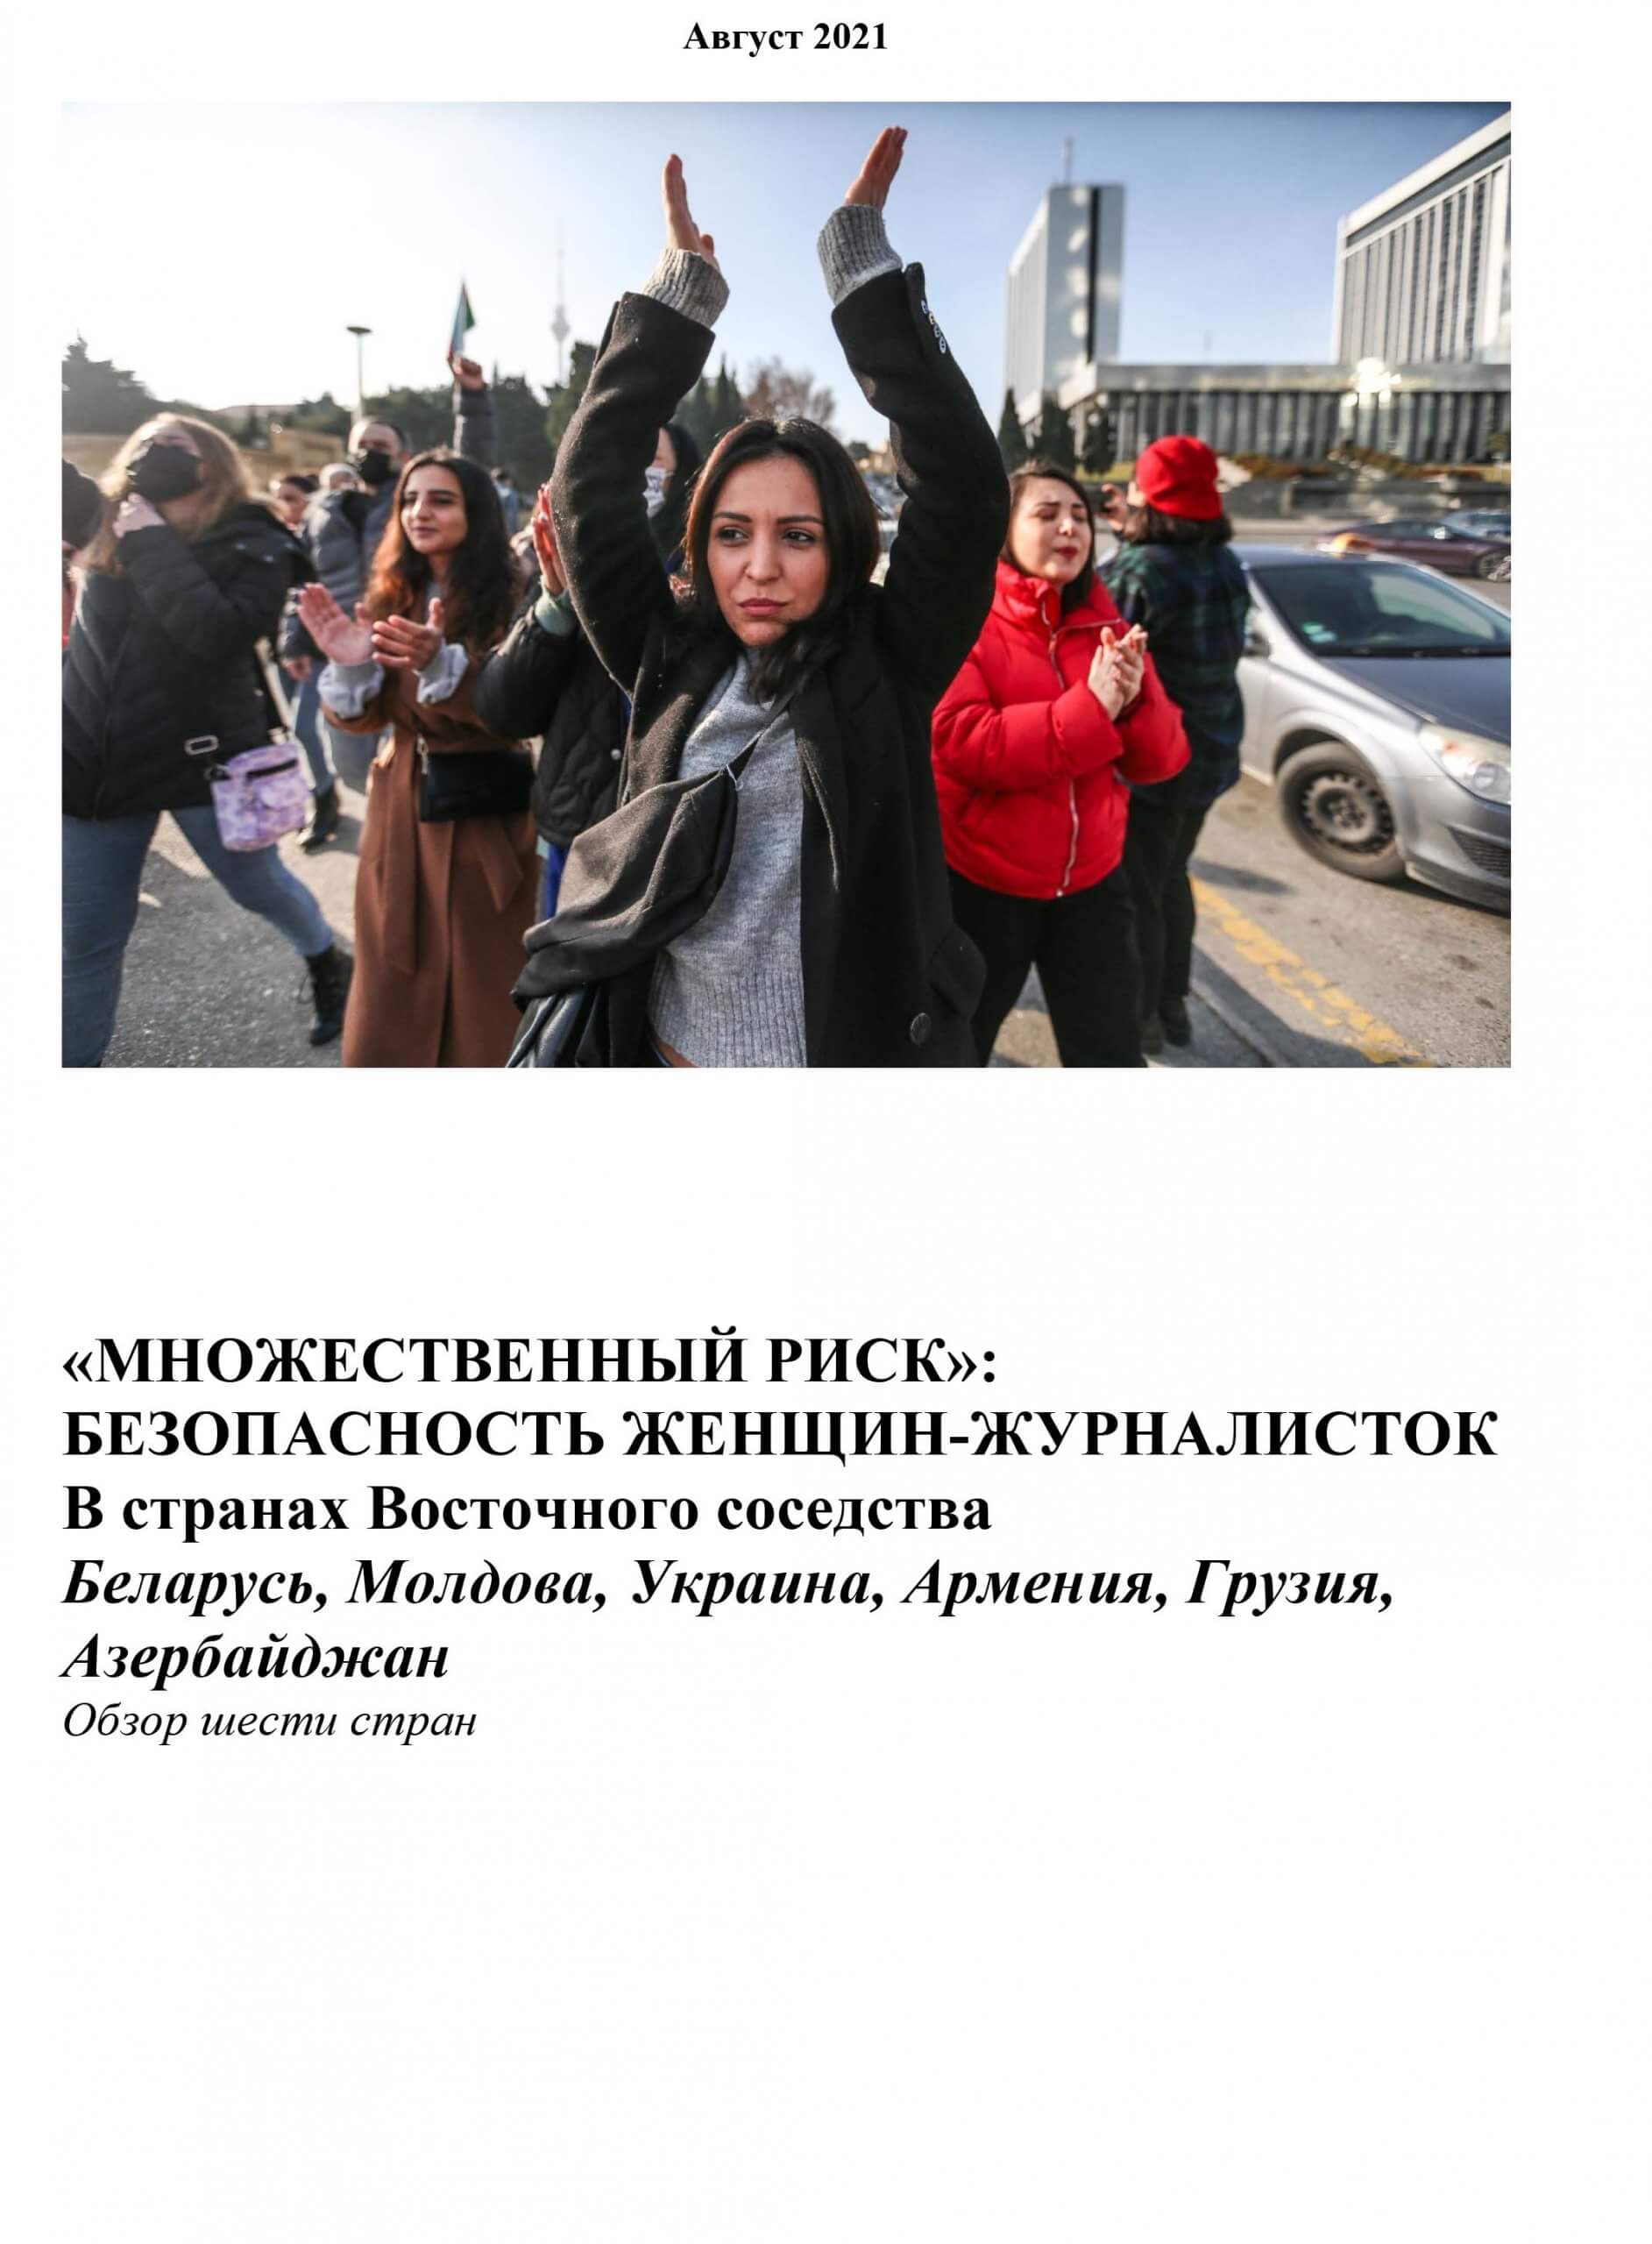 Multiple risks: The safety of women journalists in Armenia, Azerbaijan, Belarus, Georgia, Moldova and Ukraine